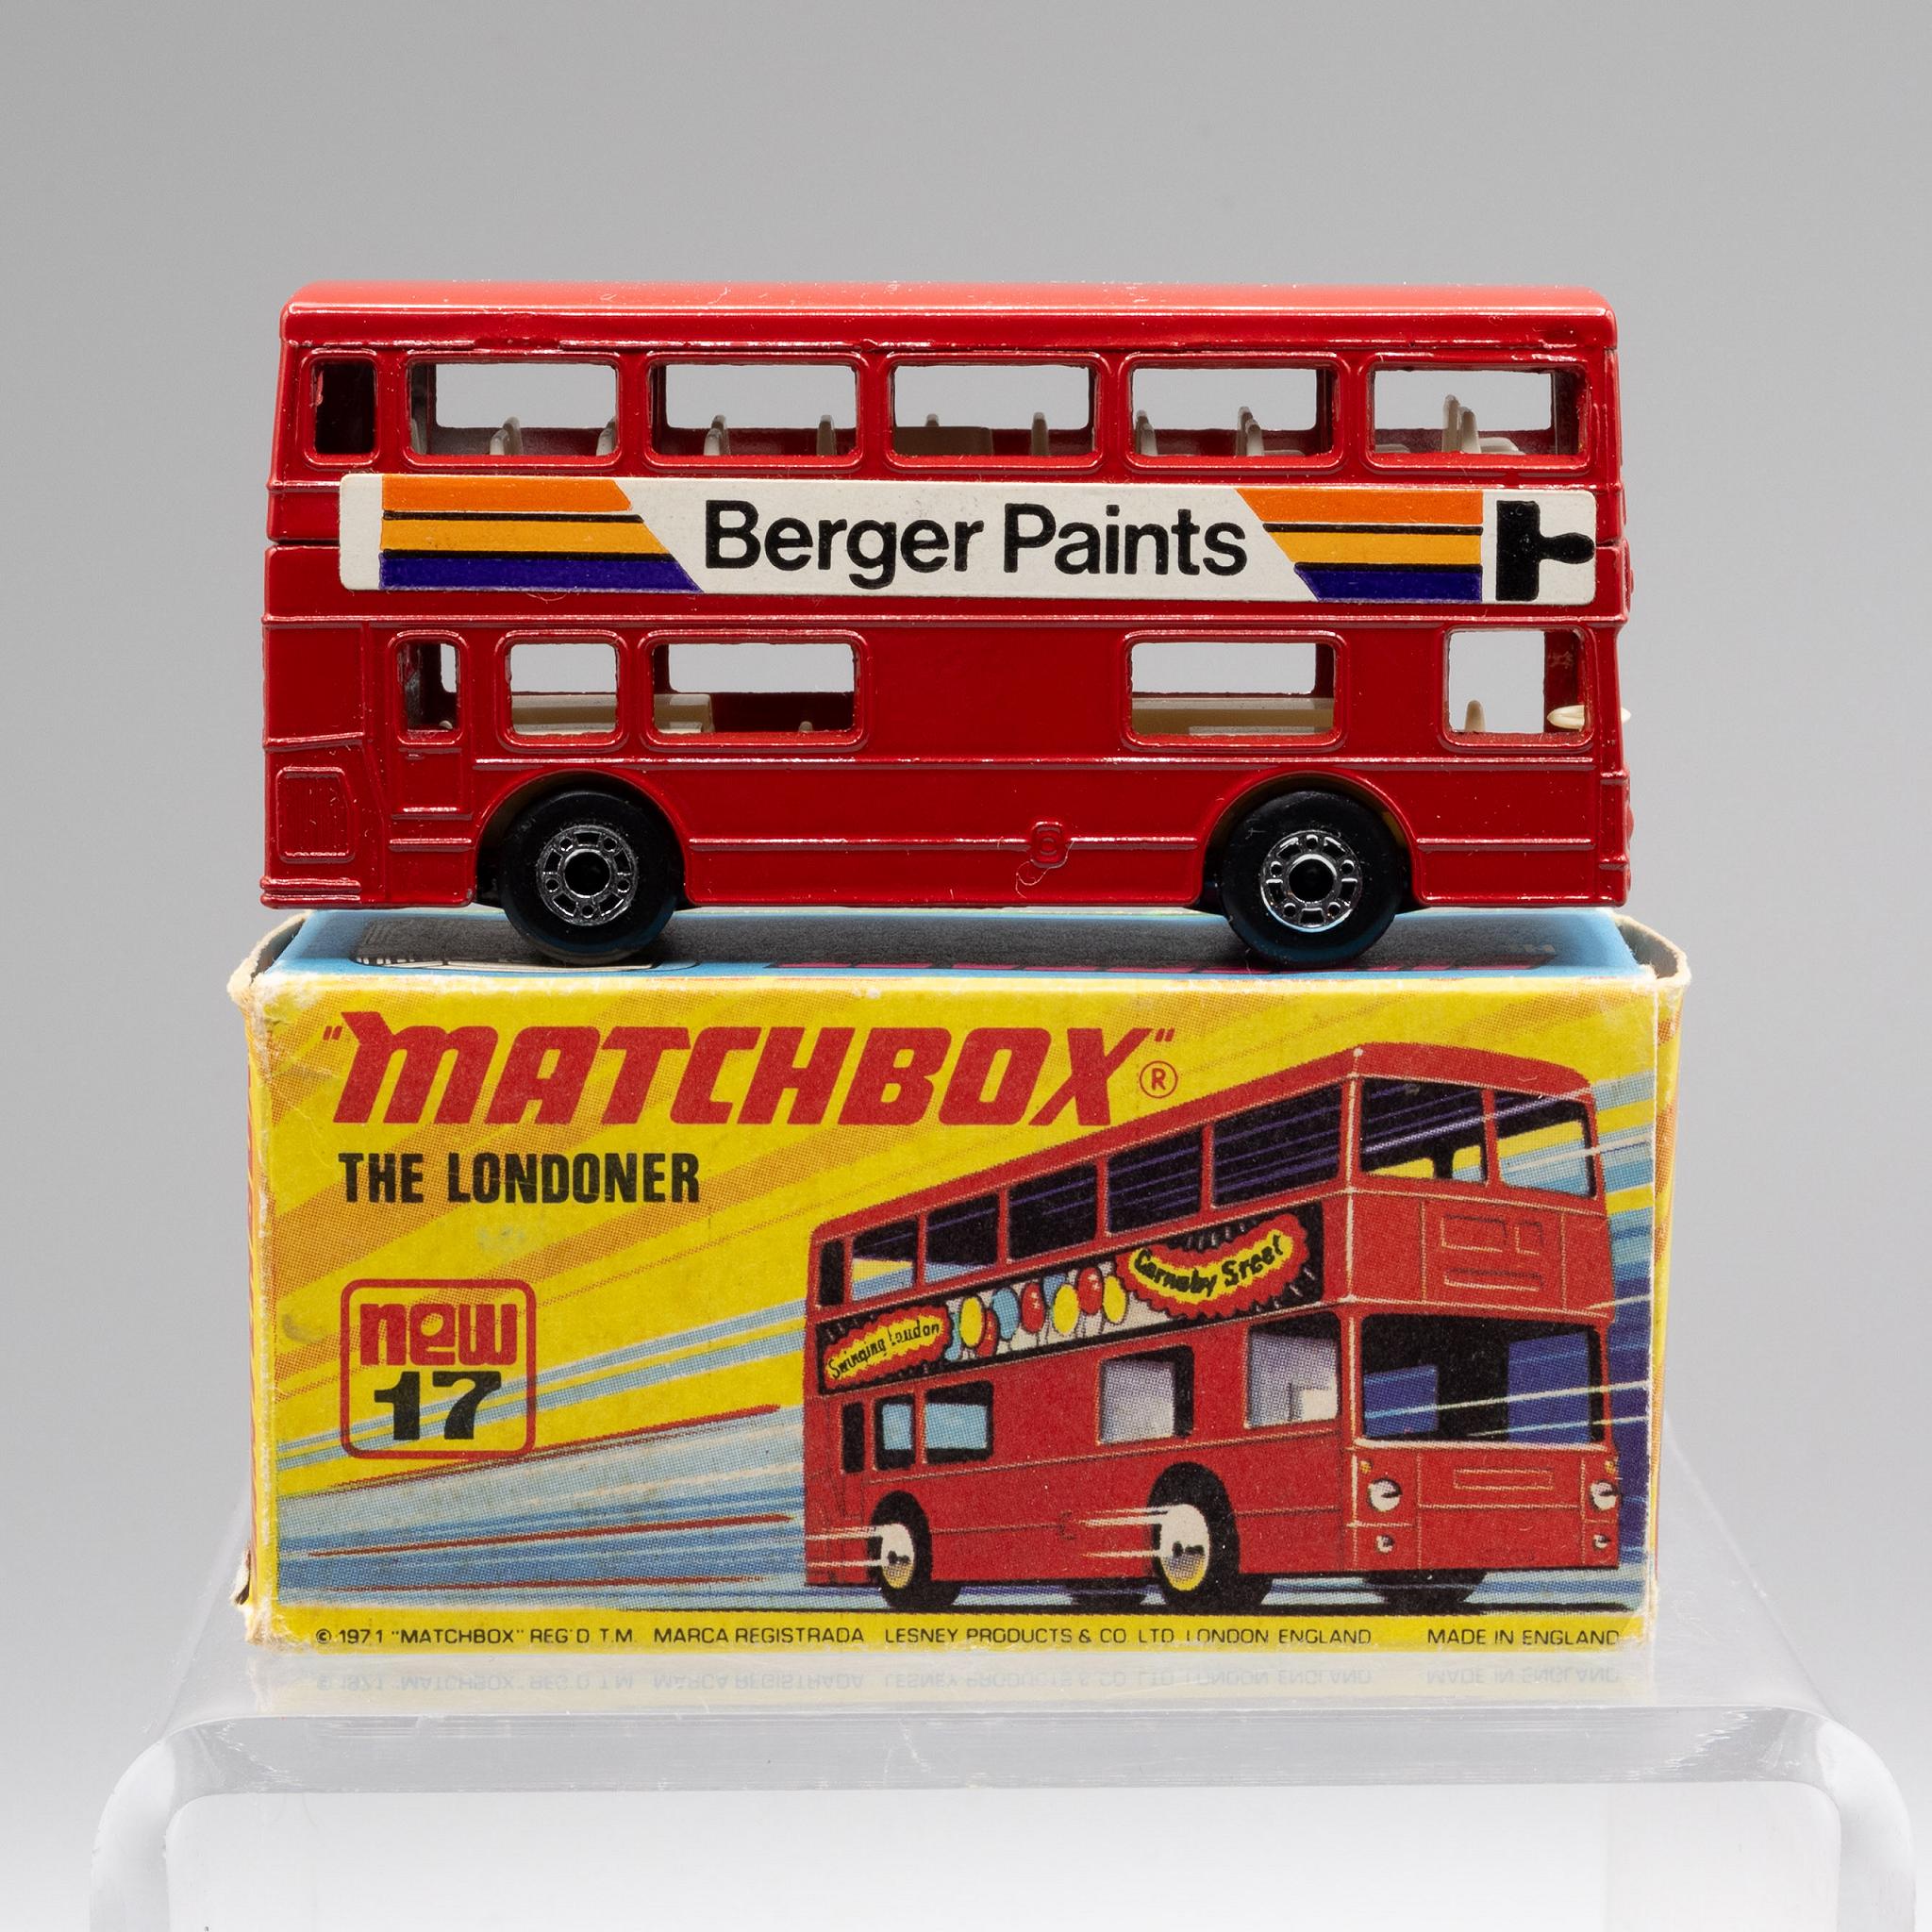 Matchbox+Superfast+The+Londoner+bus+Berger+Paints picture 1